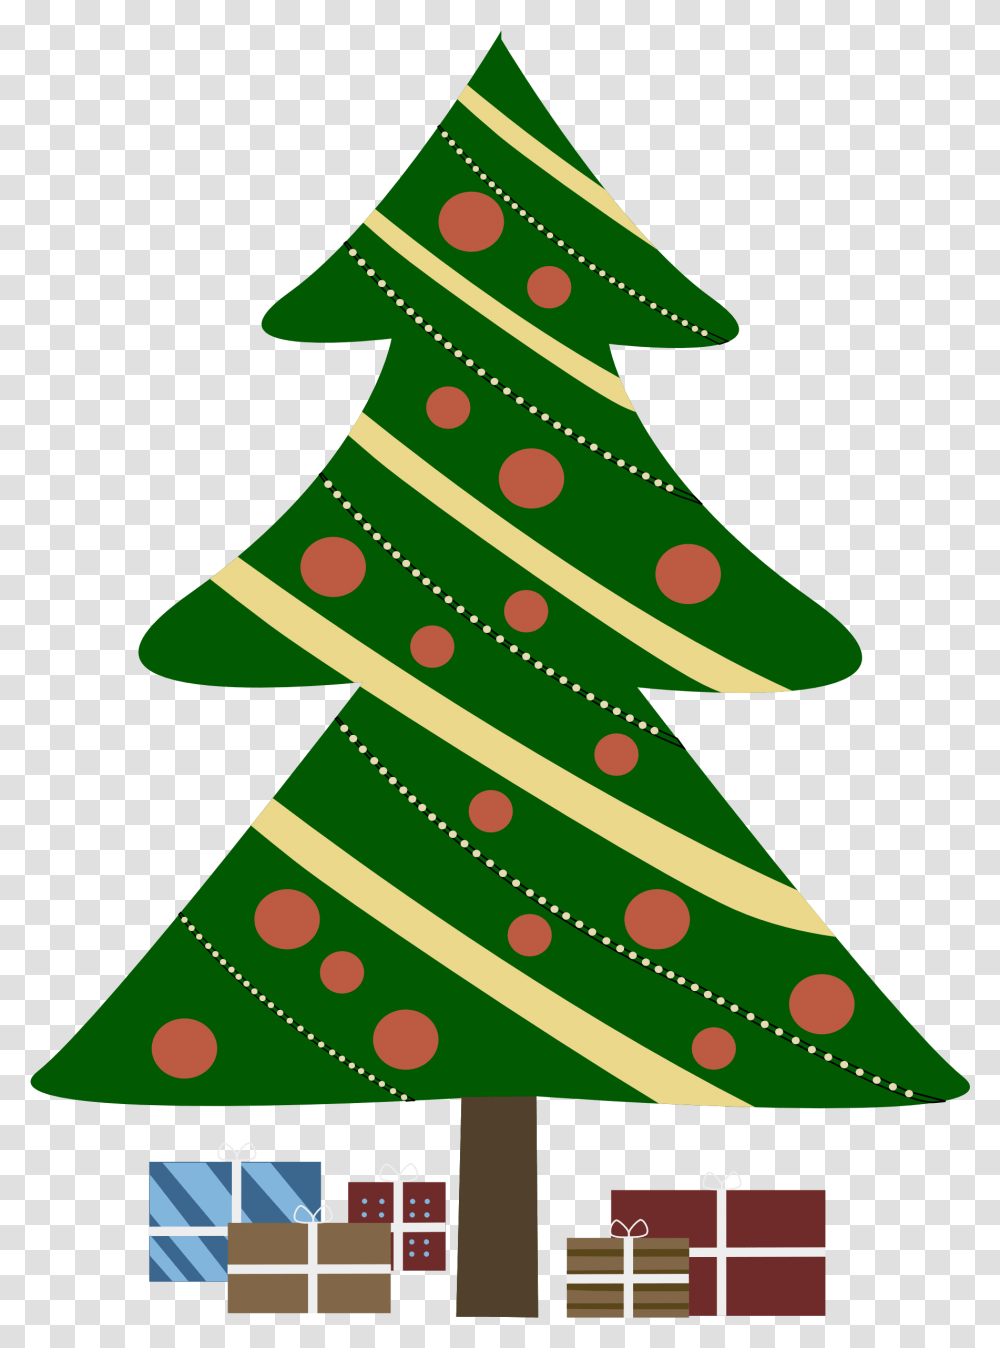 Xmas Stuff For Animated Christmas Tree Cute Christmas Tree, Plant, Ornament, Star Symbol Transparent Png